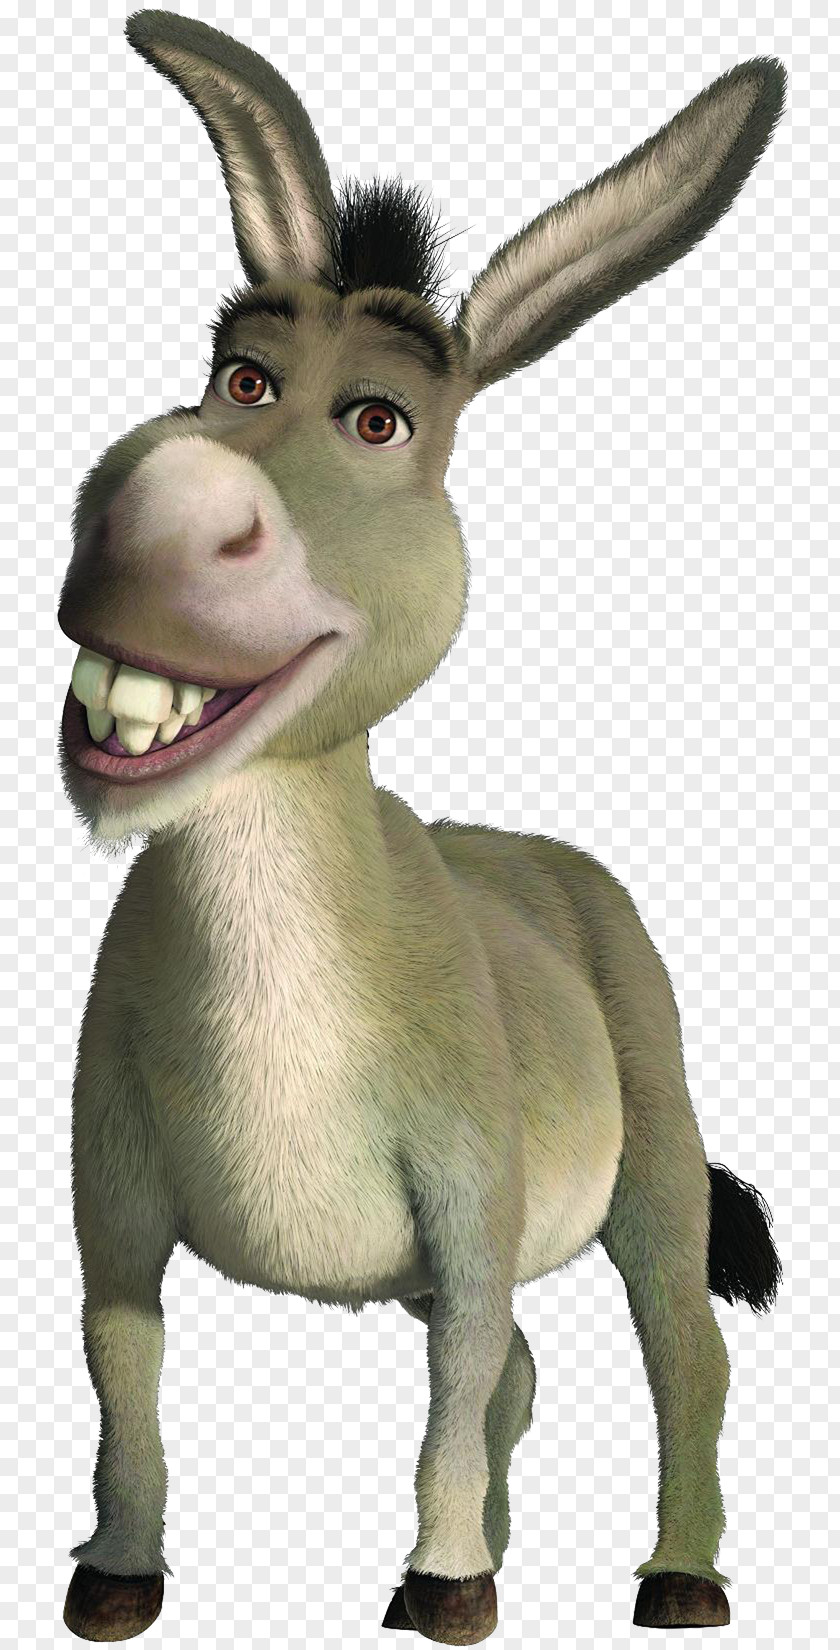 Donkey Princess Fiona Shrek The Musical Film Series PNG